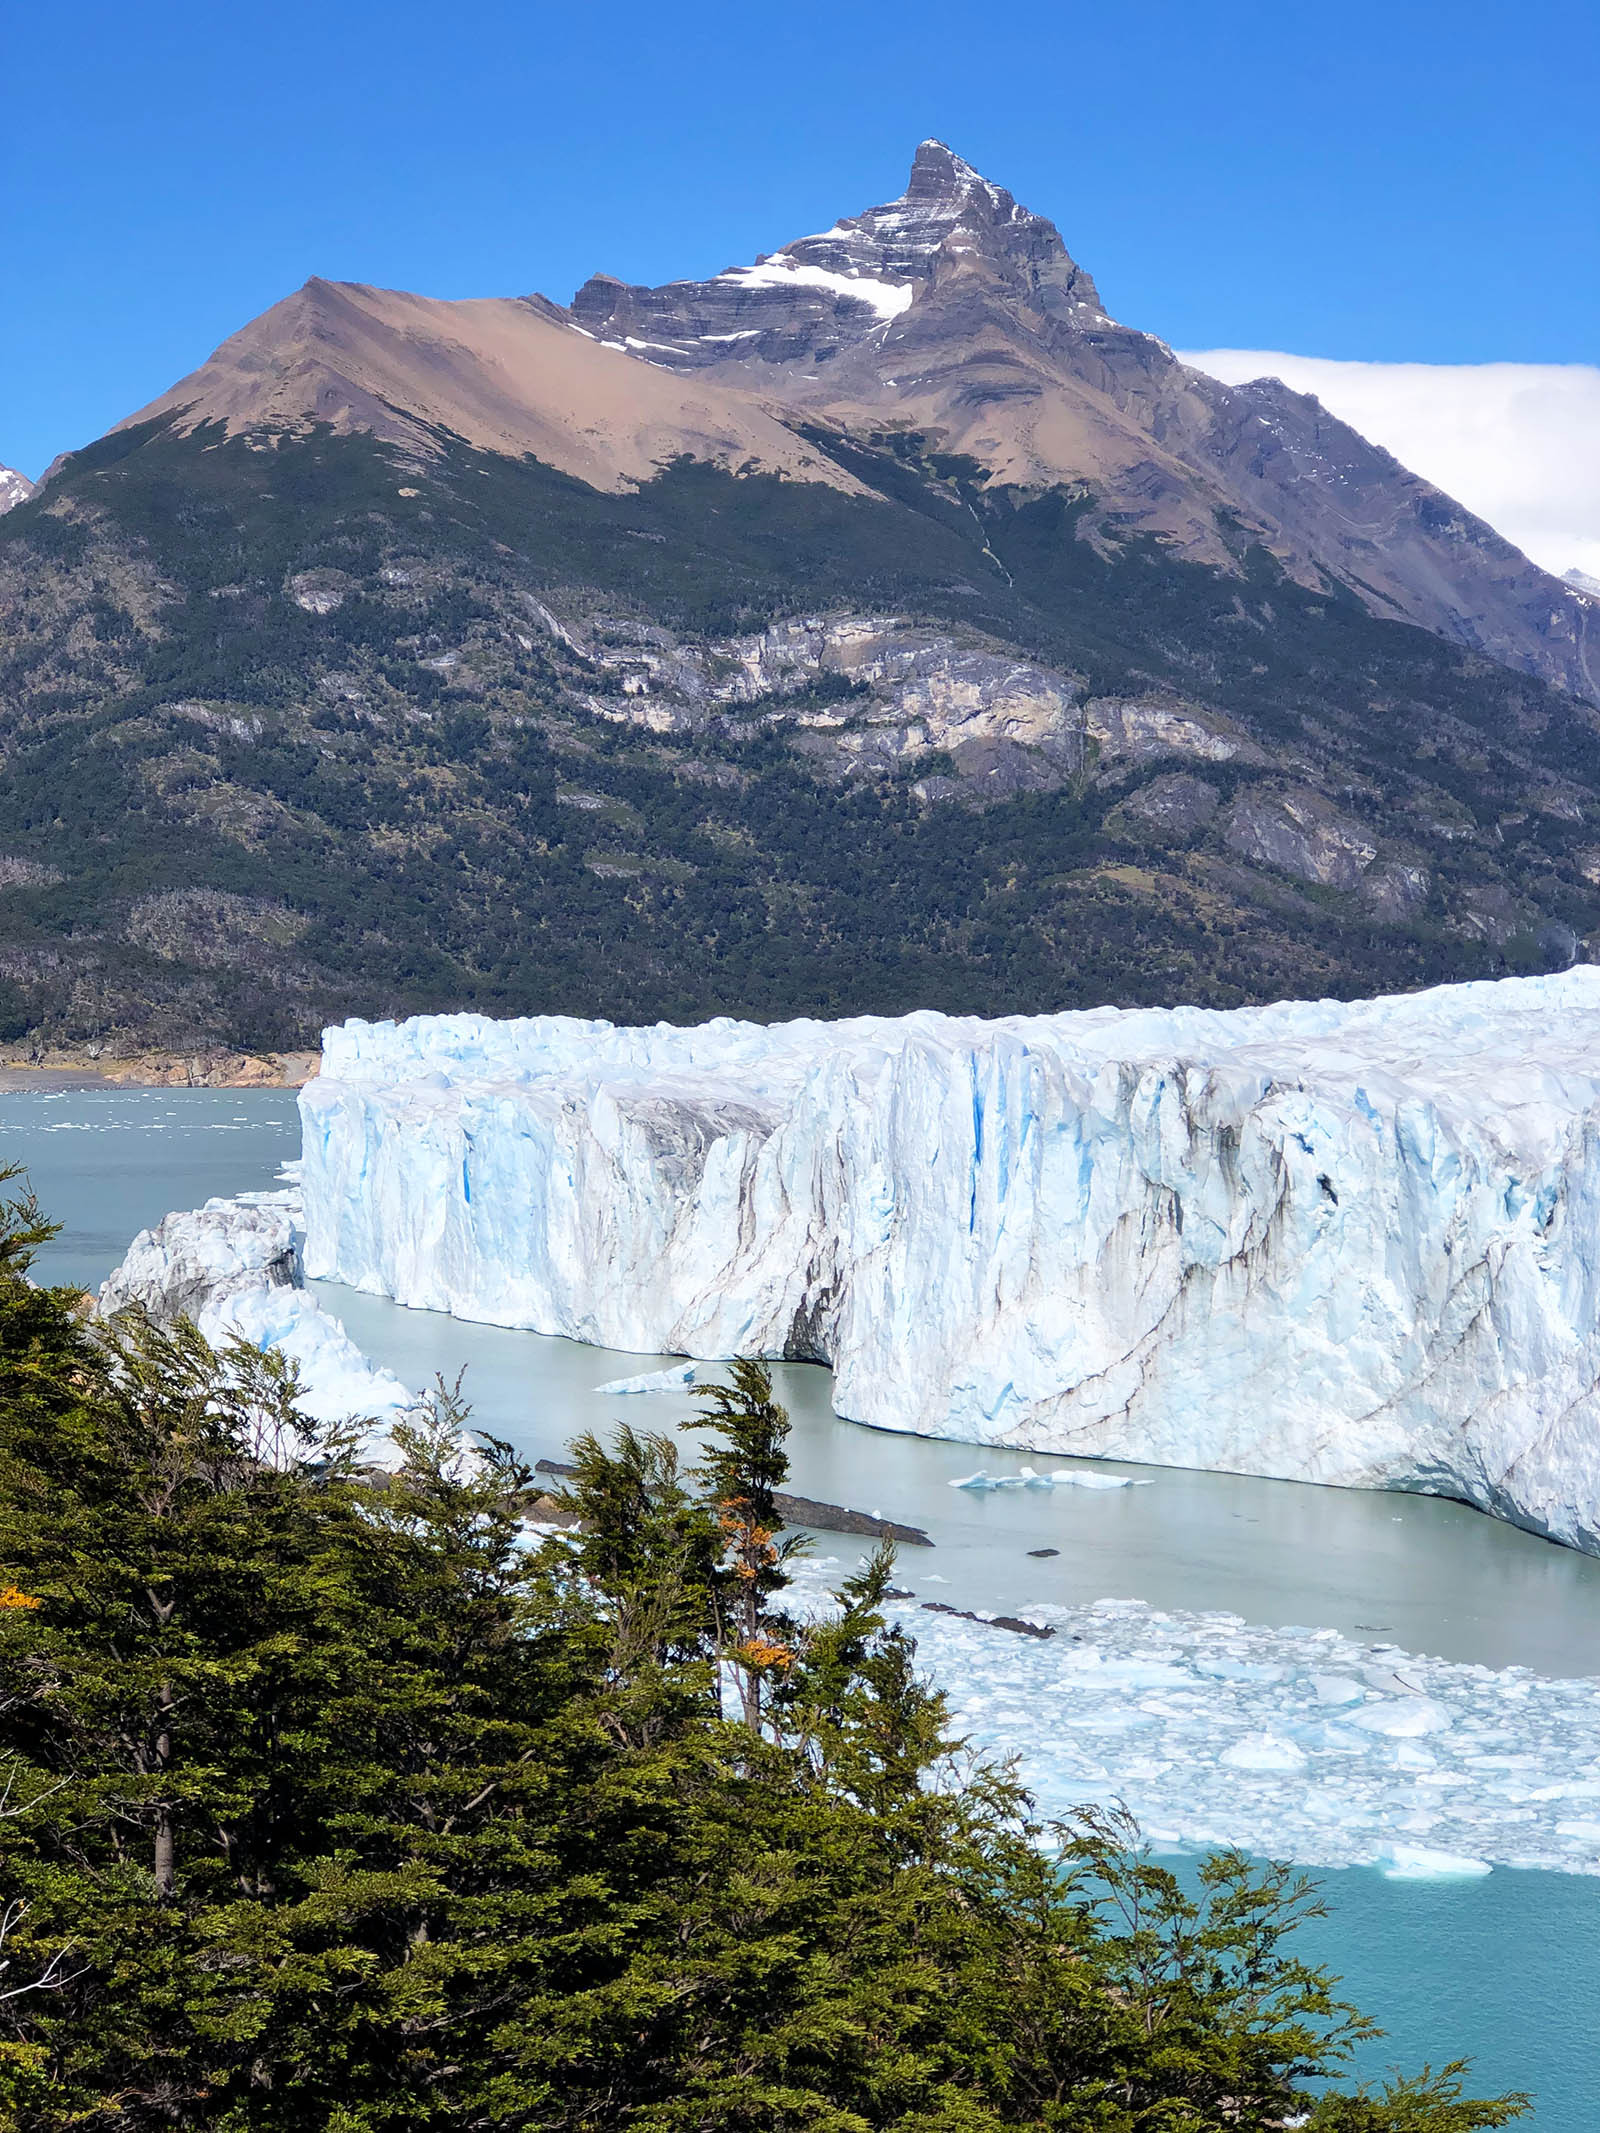 The spectacular Perito Moreno glacier. Credit: Carolina Valenzuela